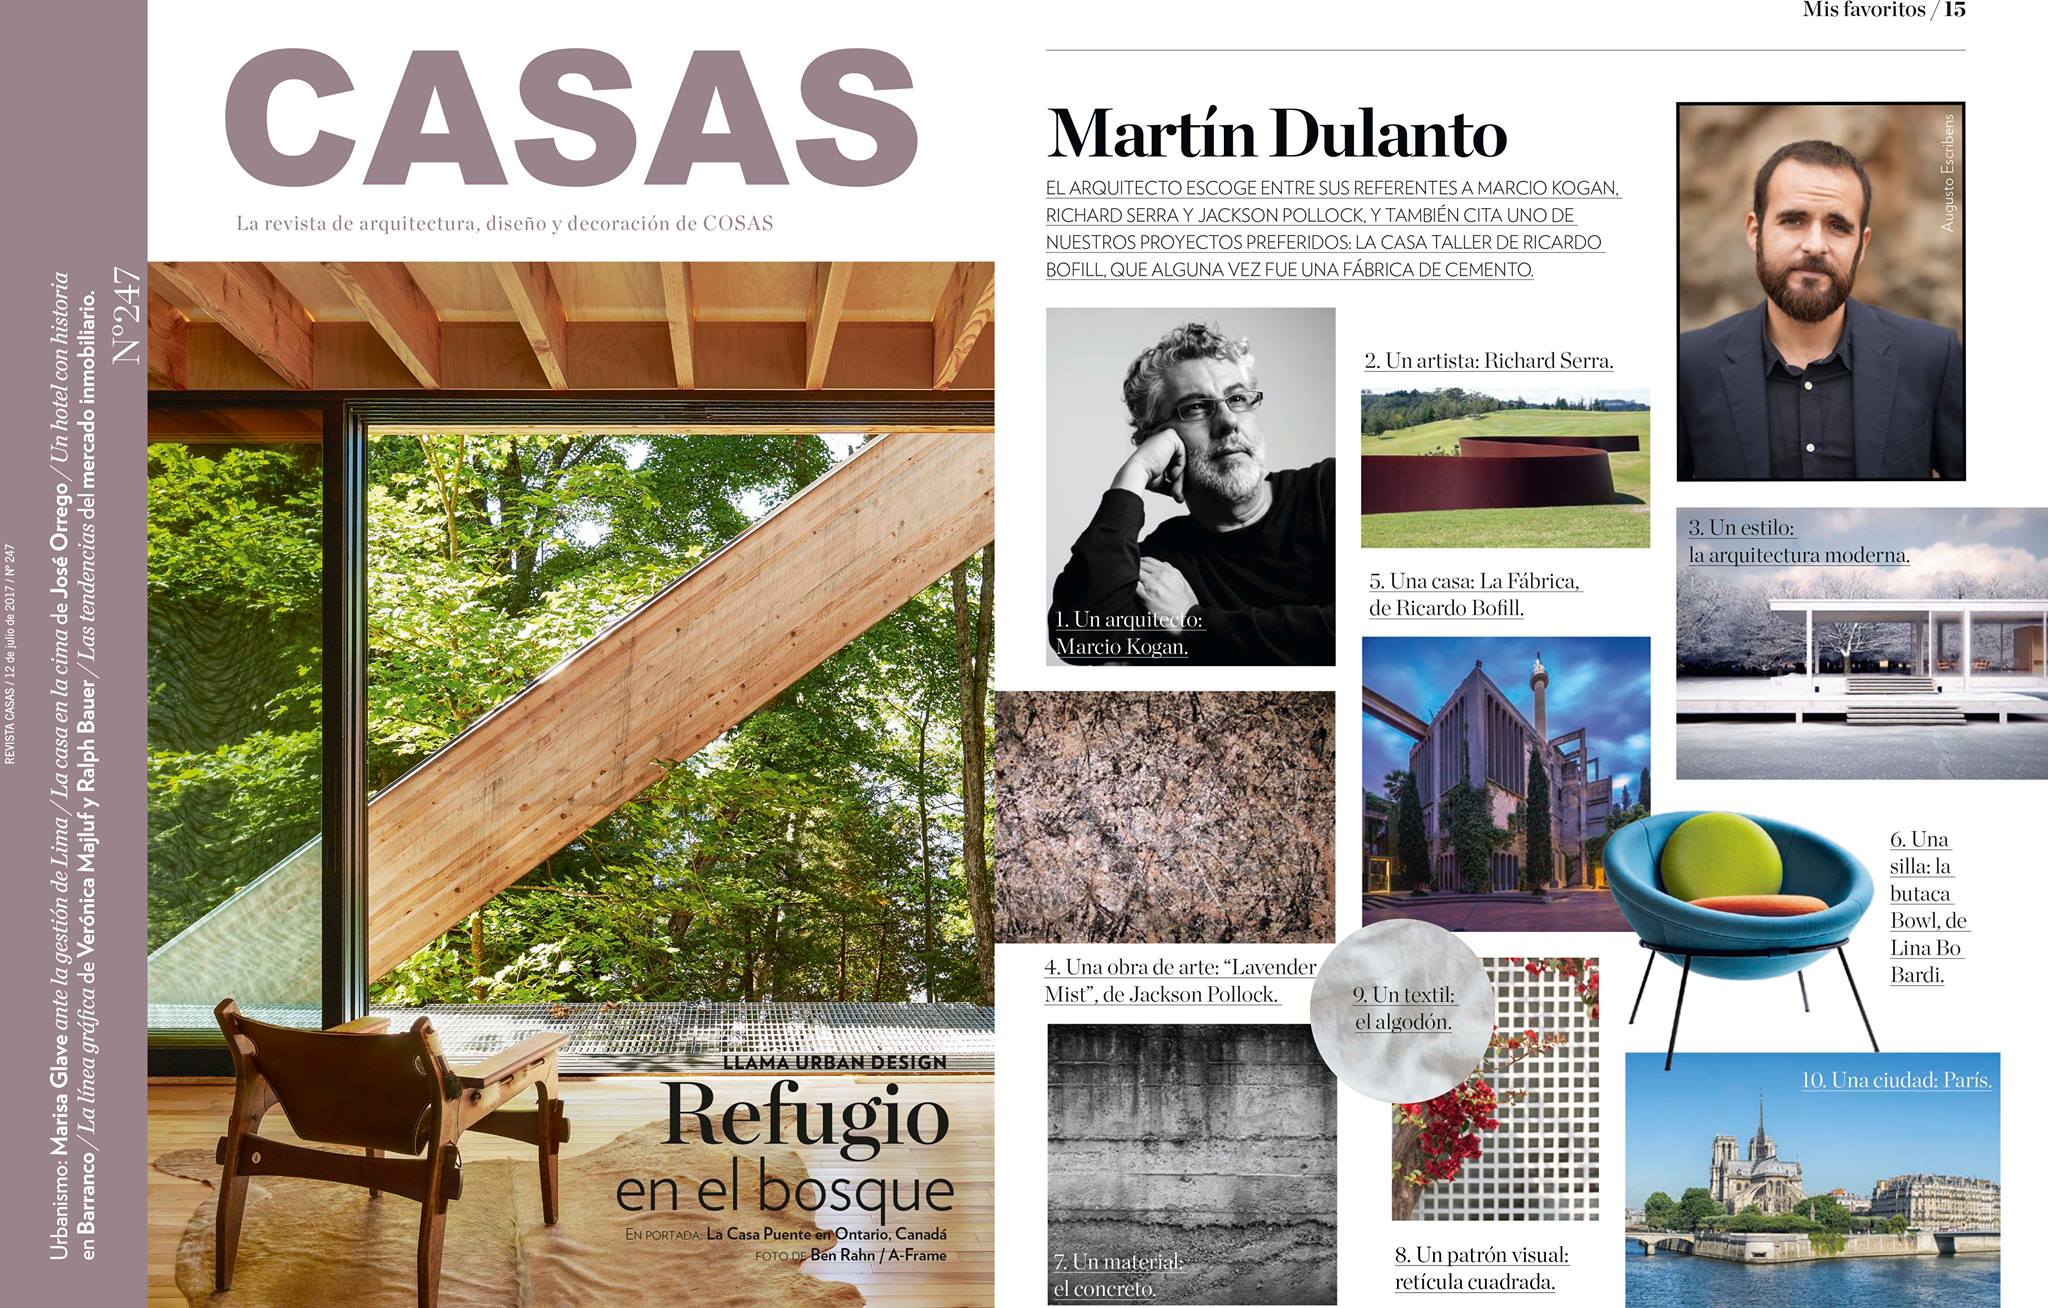 basura cuenca Carteles Martin Dulanto en “Mis Favoritos” de la Revista CASAS | Martin Dulanto